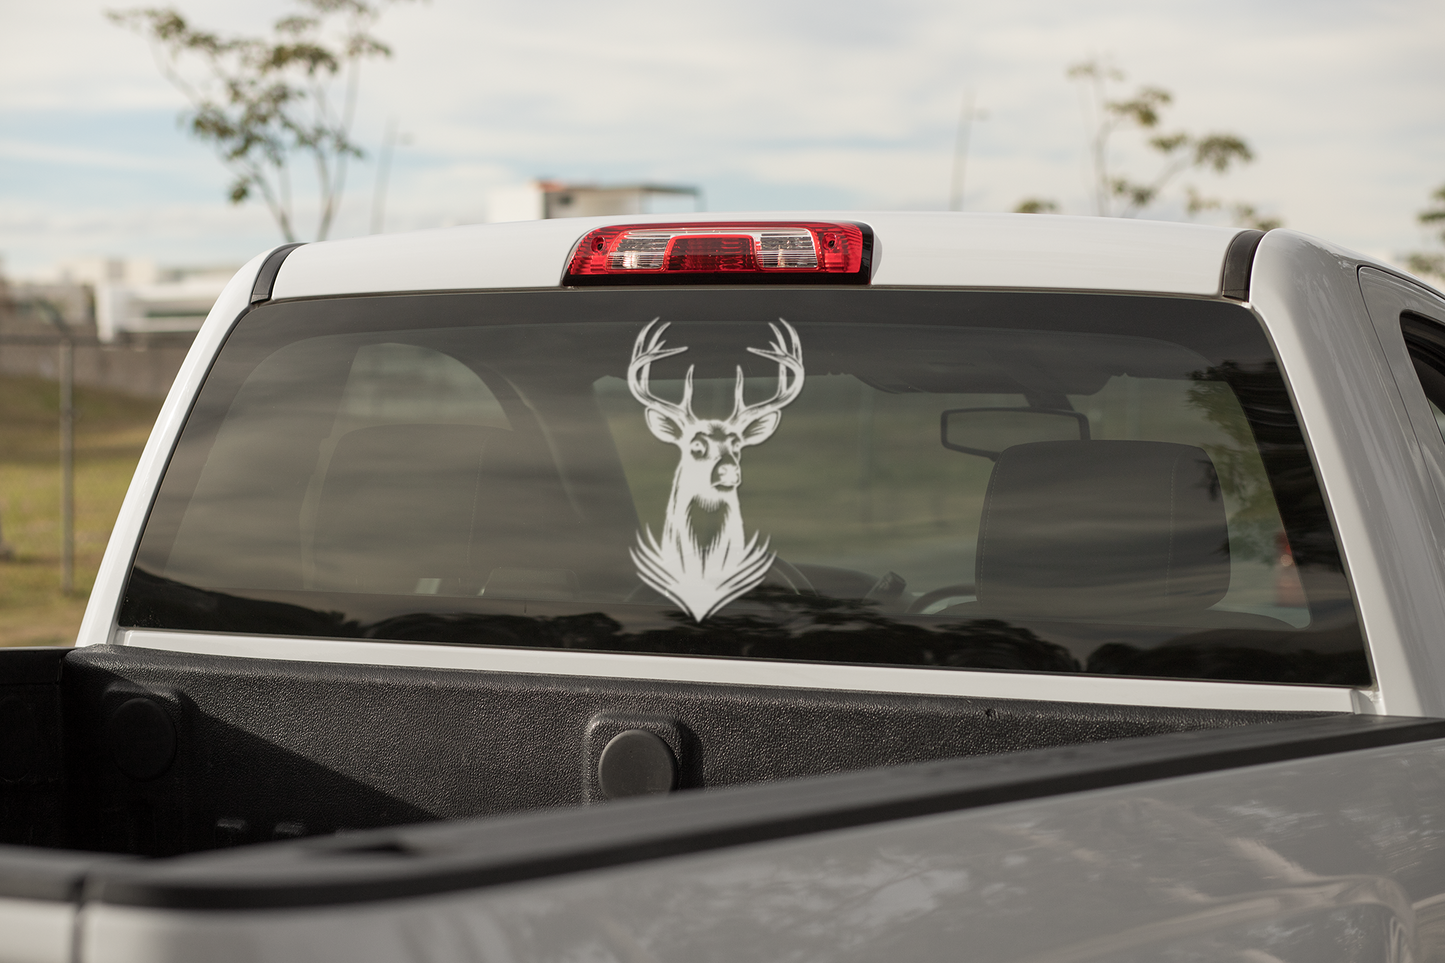 deer decal for car